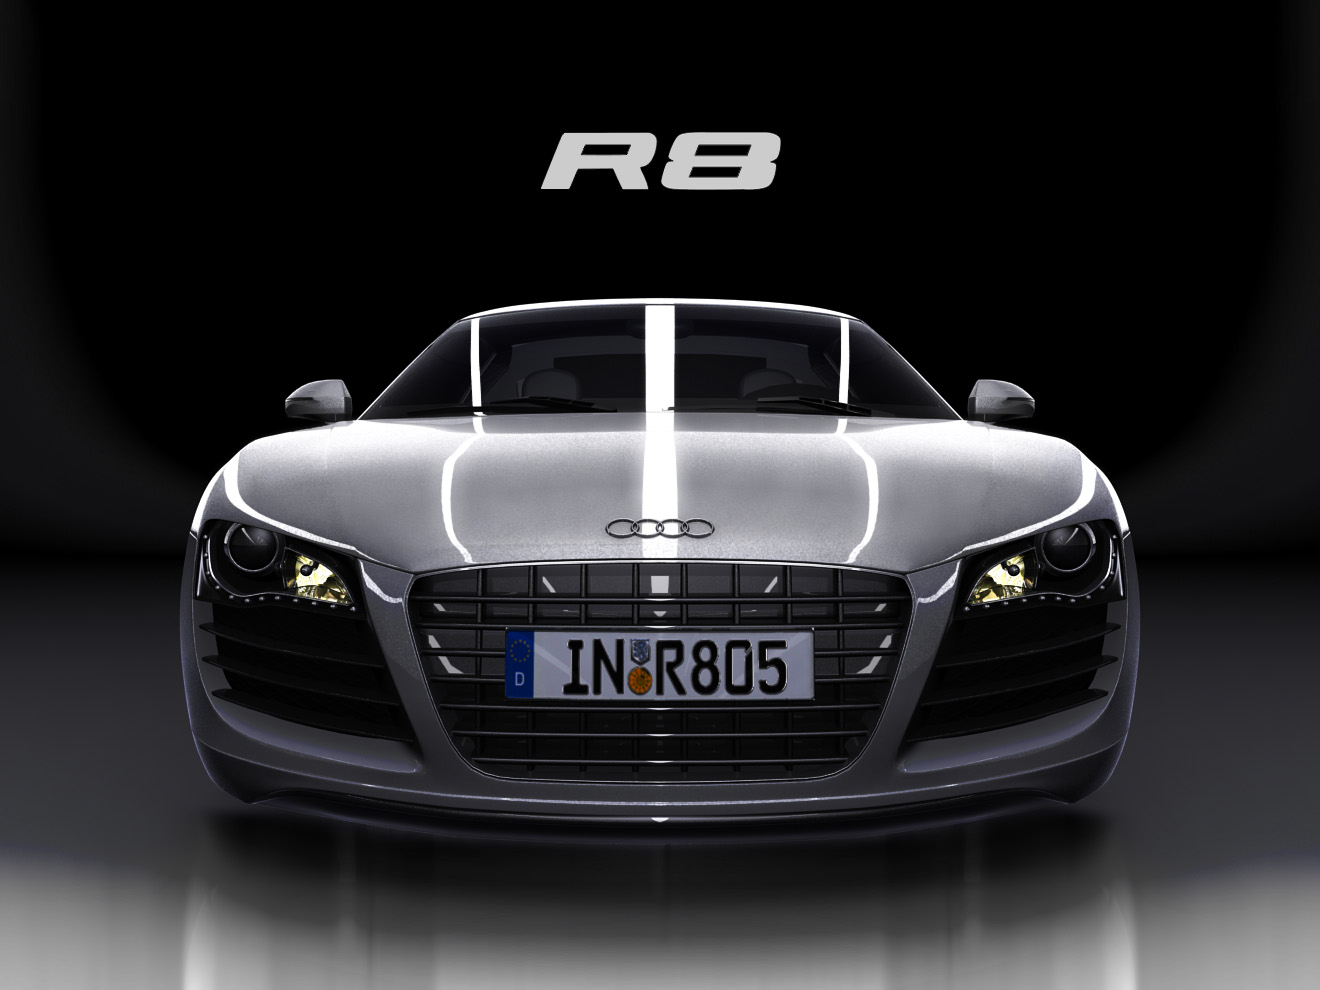 Labels: Audi R8 Pricing